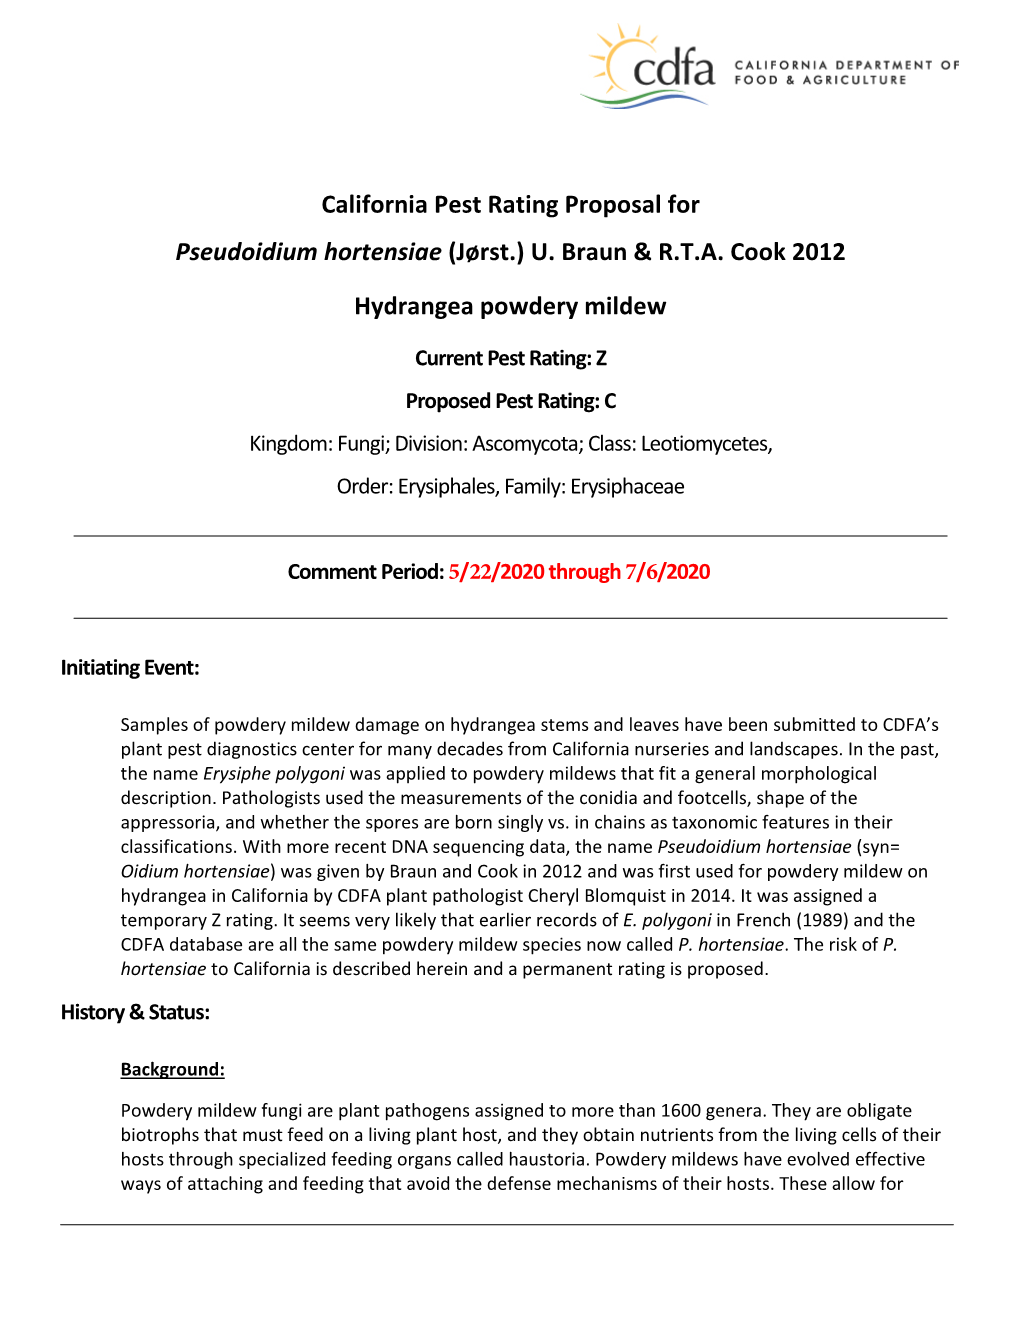 California Pest Rating Proposal for Pseudoidium Hortensiae (J�Rst.) U